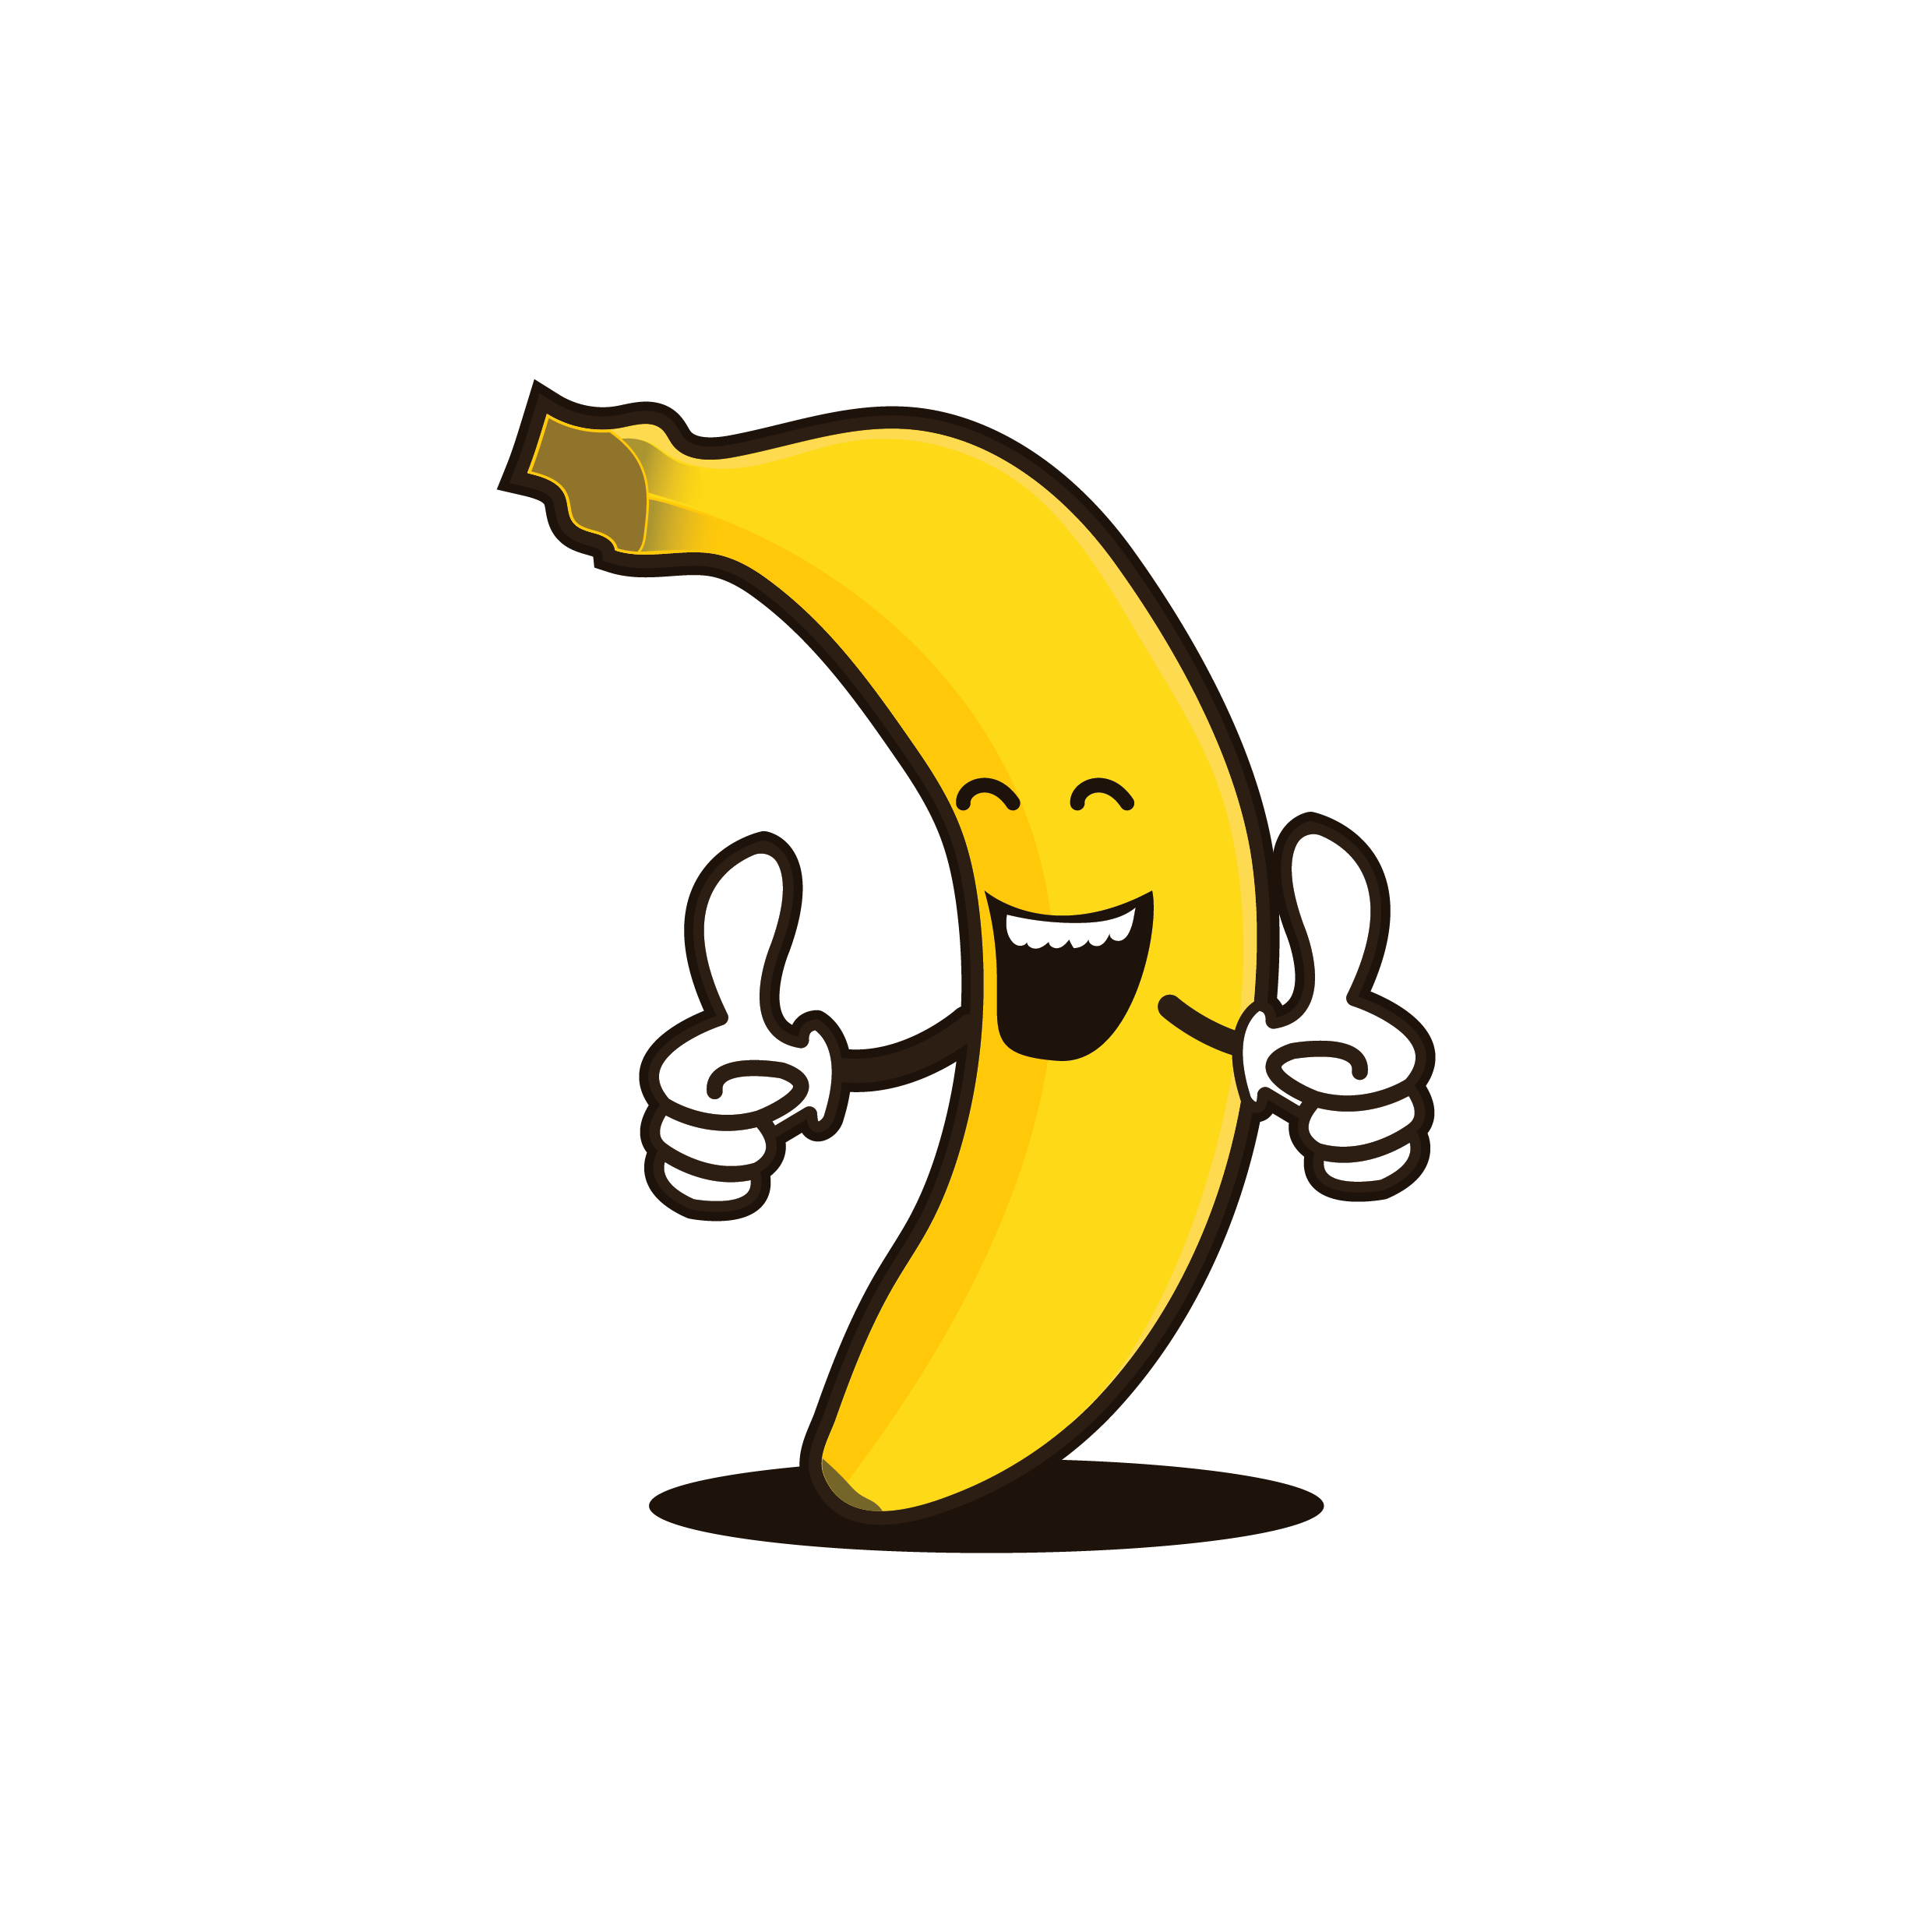 banana-joke